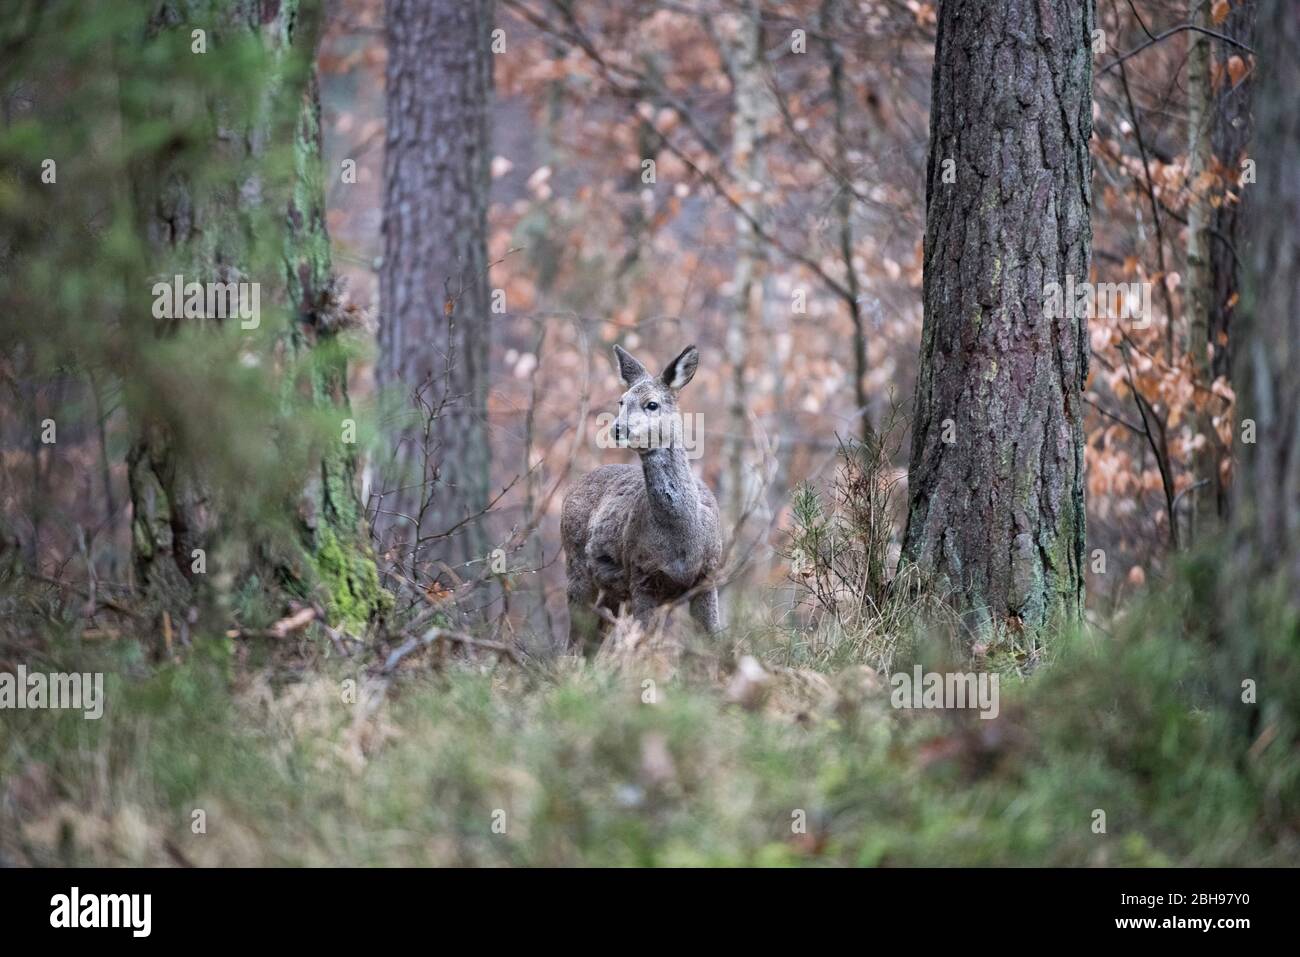 Deer, forest, spring beginning Stock Photo